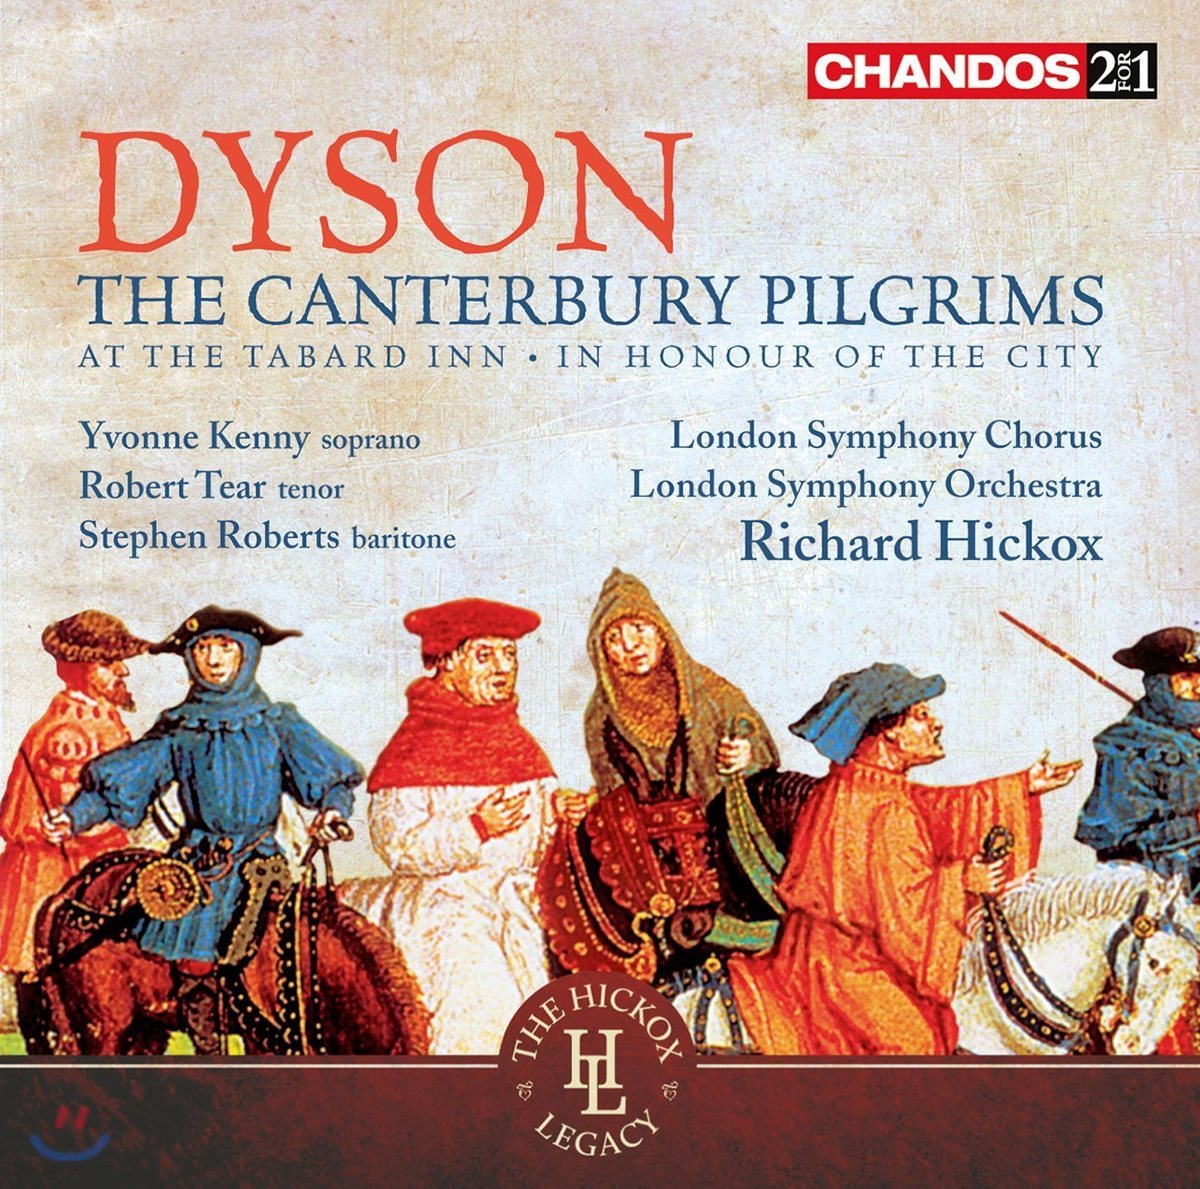 Richard Hickox 조지 다이슨: 캔터베리 순례 - 리차드 히콕스, 런던 심포니 합창단 & 오케스트라 (George Dyson: The Canterbury Pilgrims)